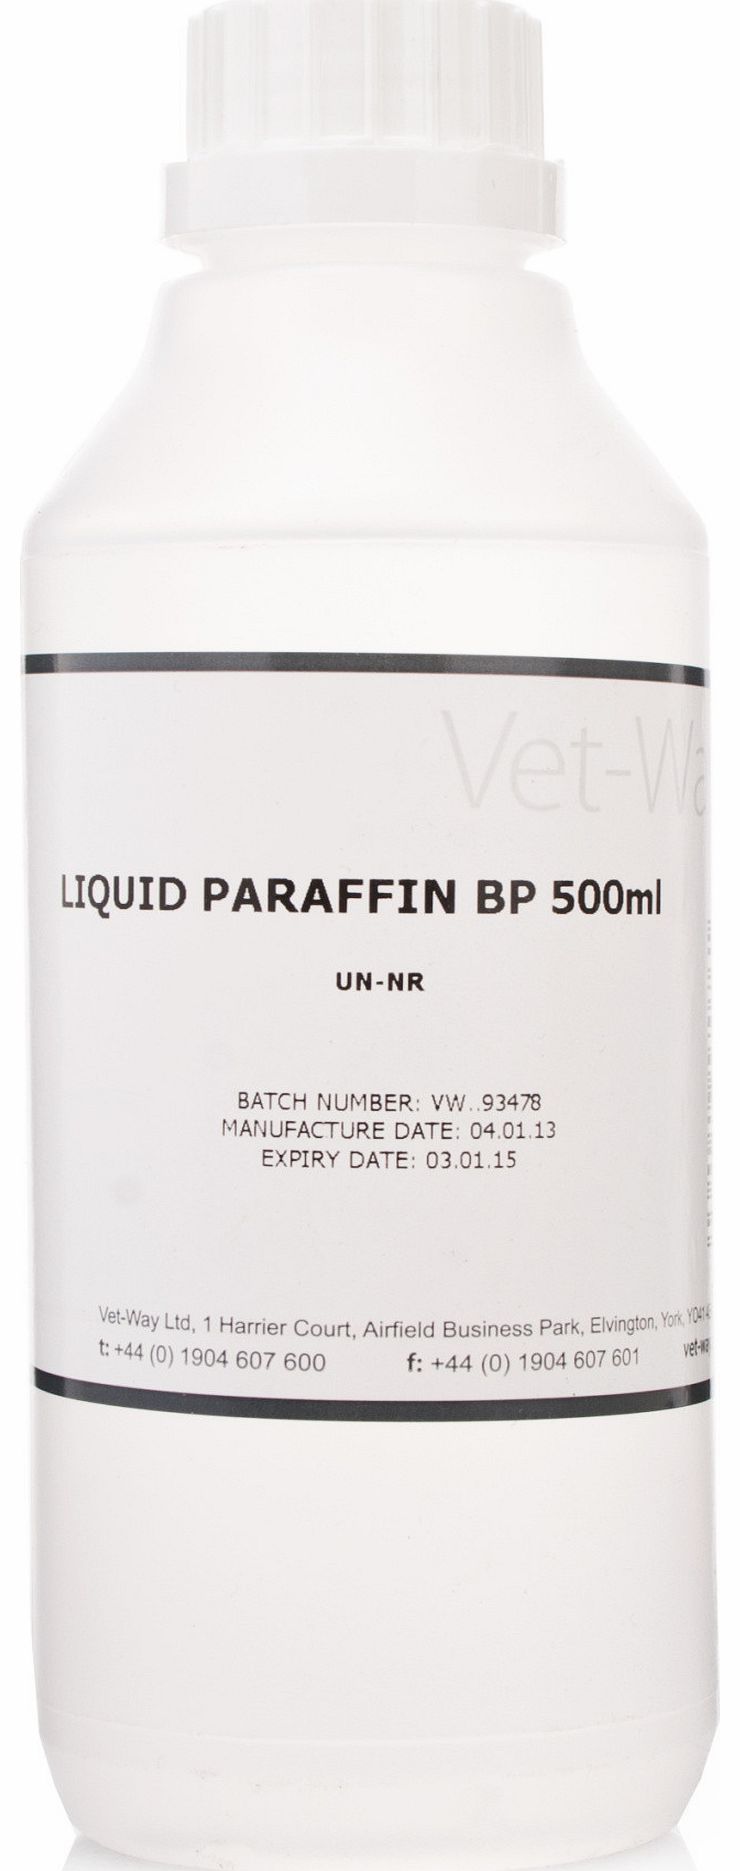 Unbranded Liquid Paraffin - vet